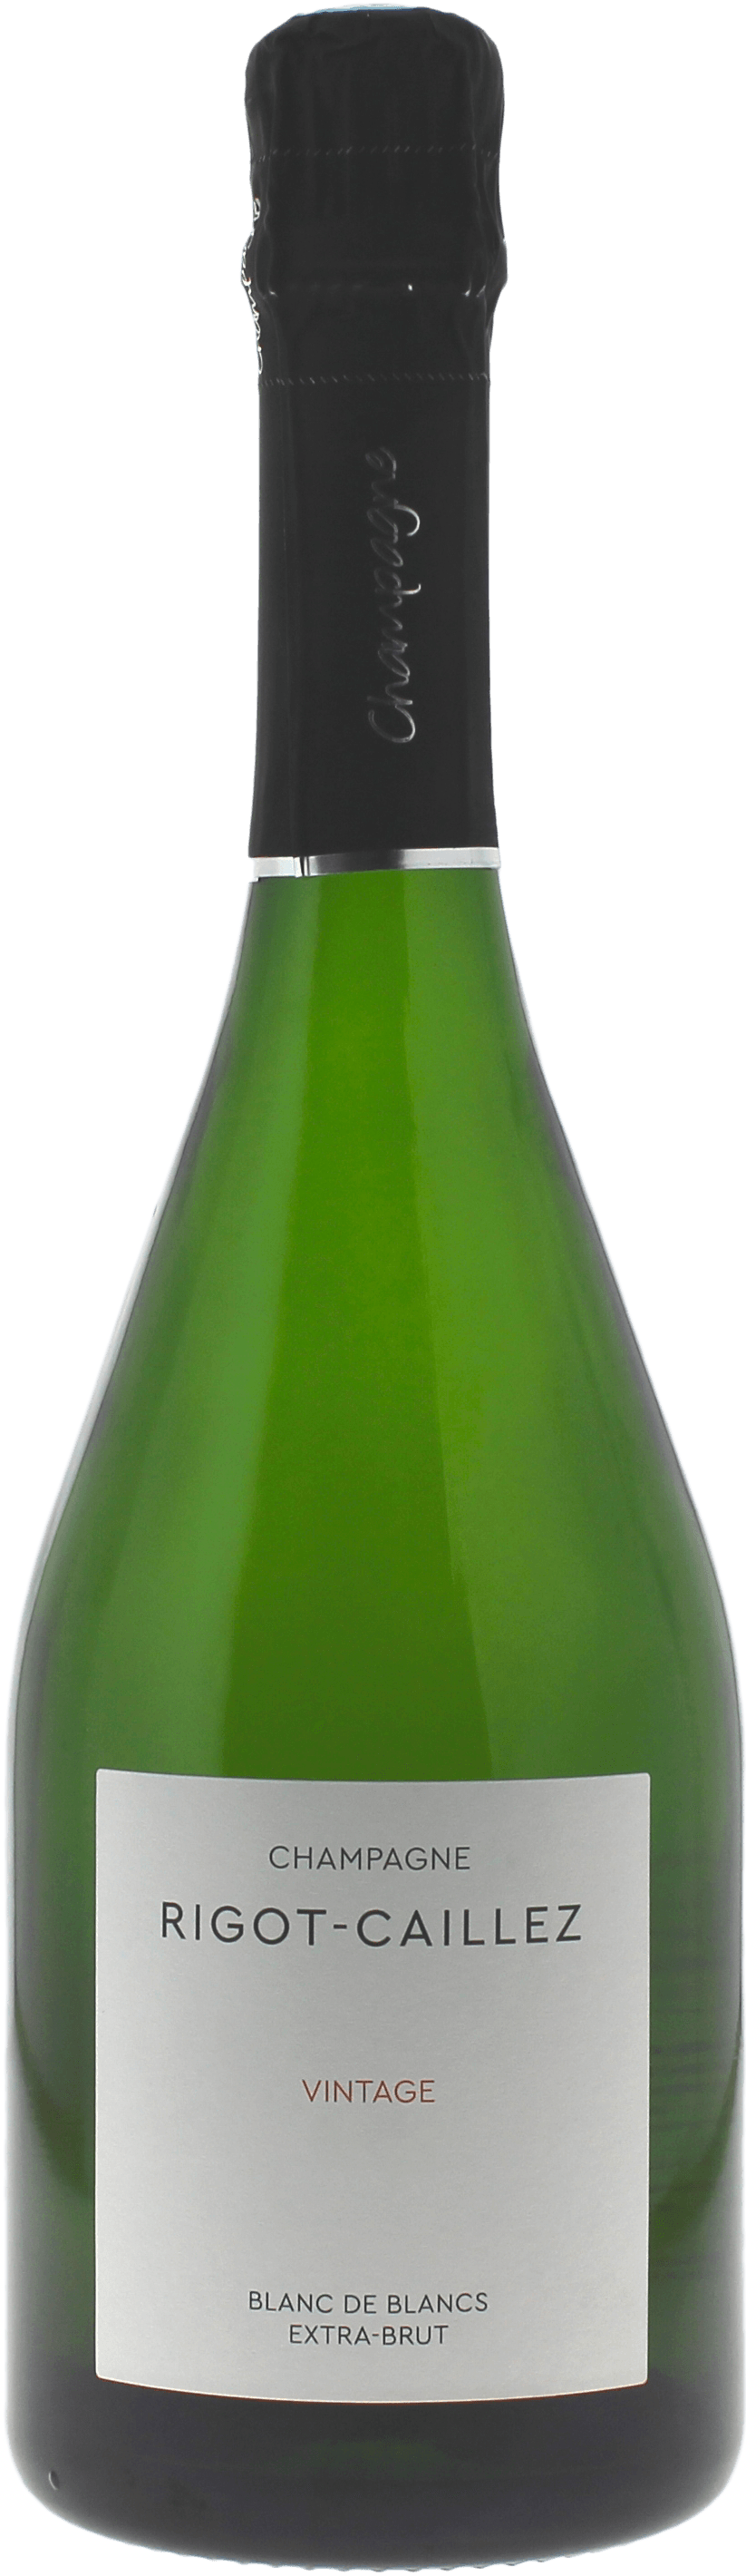 Rigot-caillez blanc de blancs extra brut 2012  Rigot Caillez, Champagne